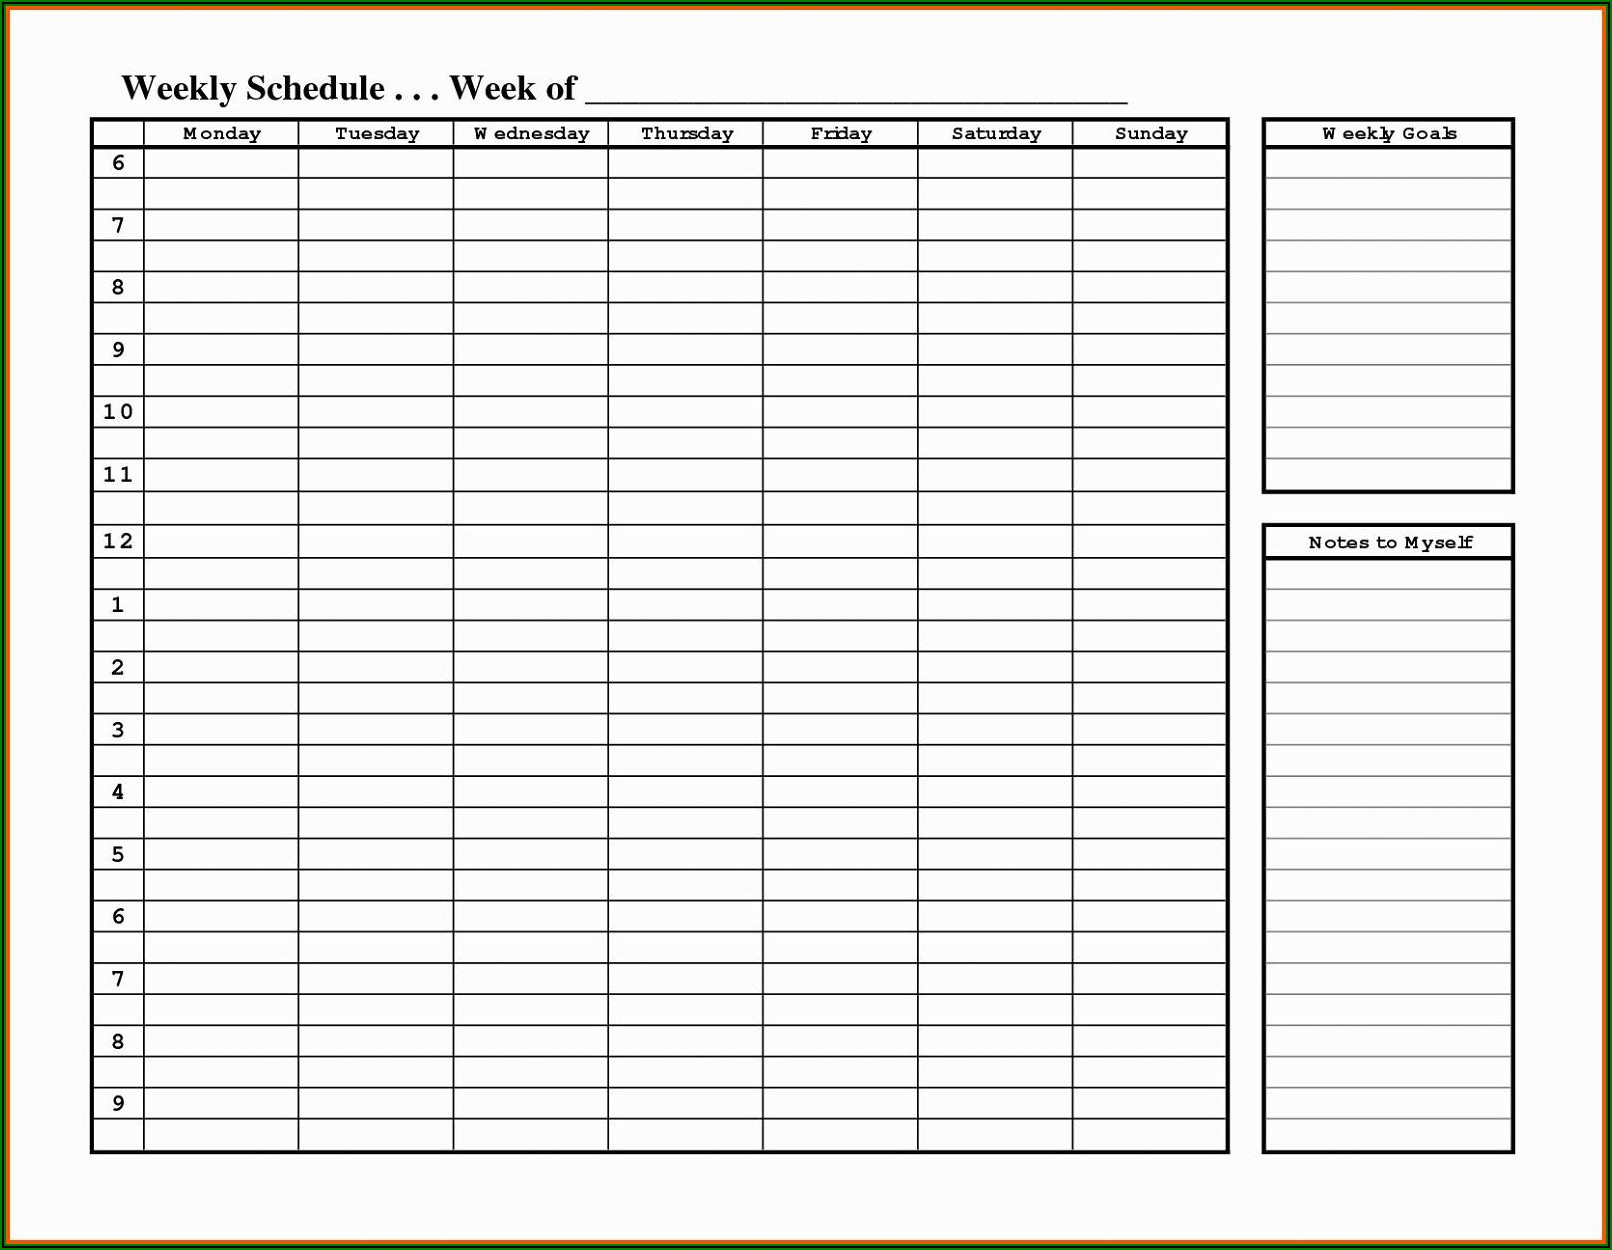 Calendar Weekly Schedule Template